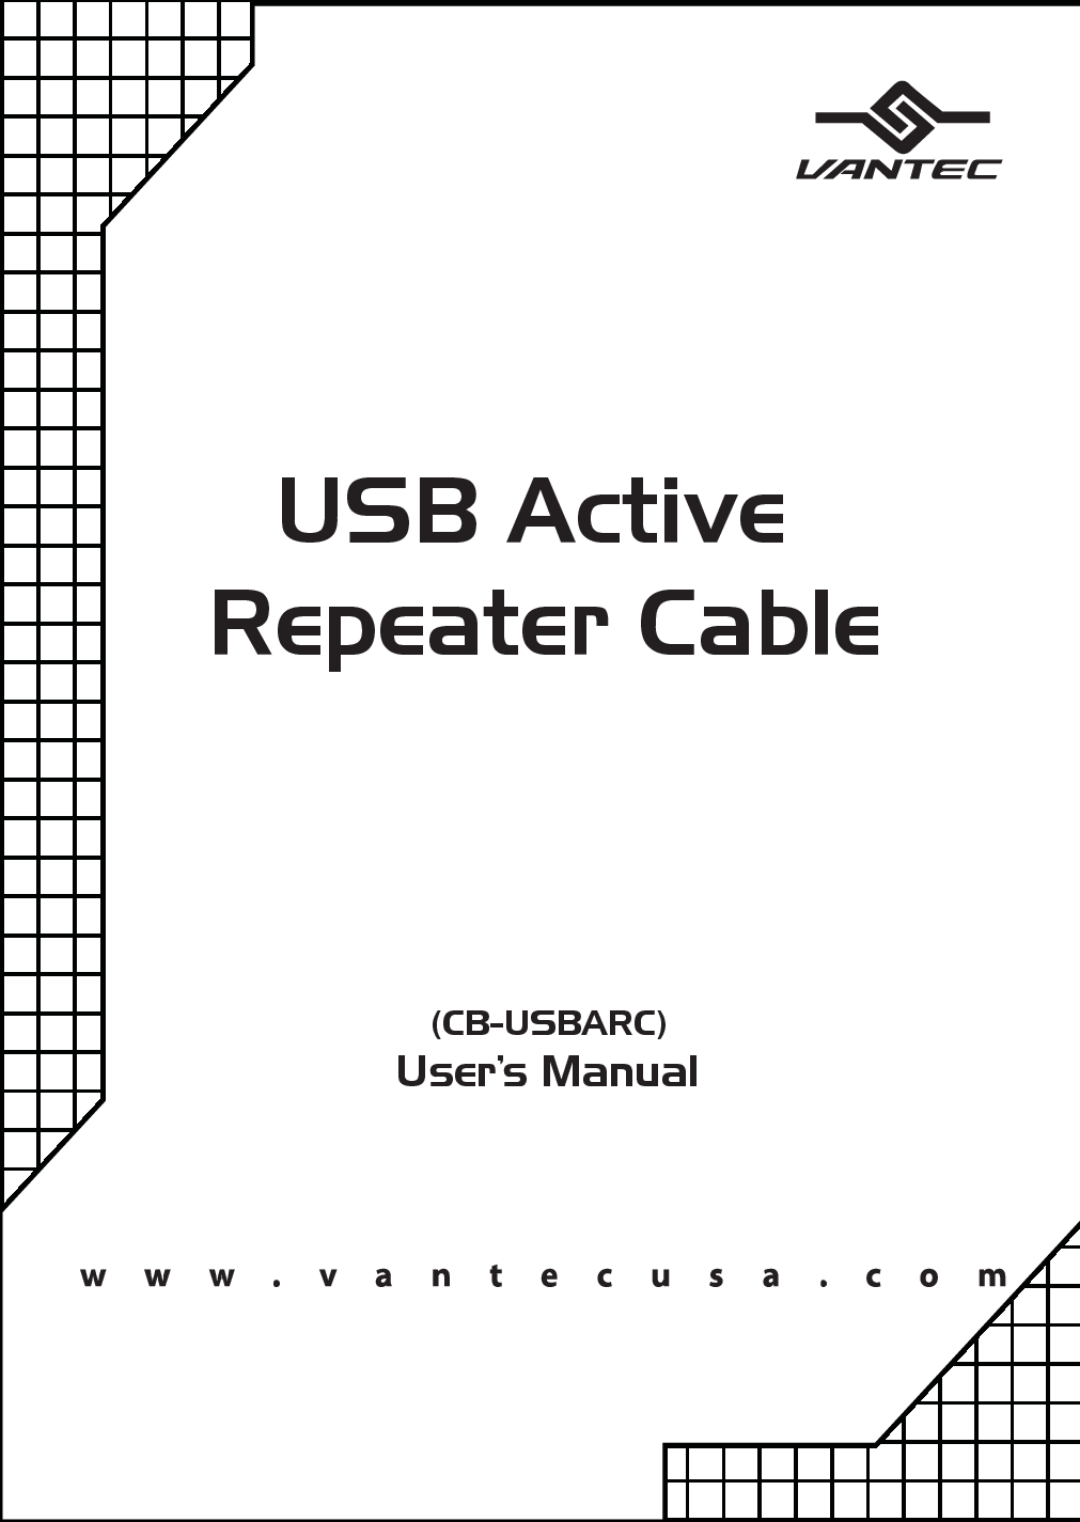 Vantec CB-USBARC user manual USB Active Repeater Cable, User’s Manual 